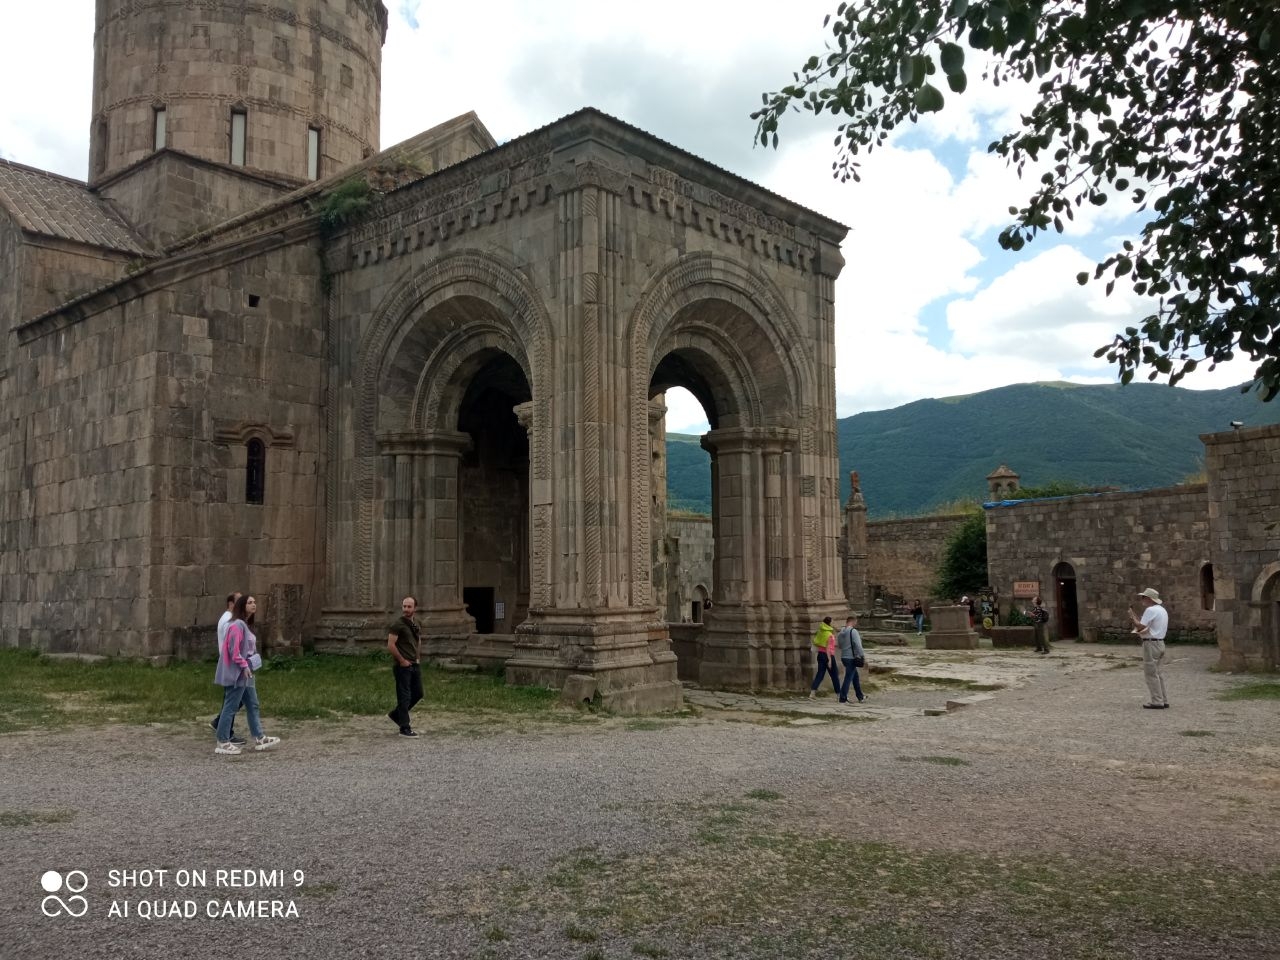 Татевский монастырь Татев, Армения